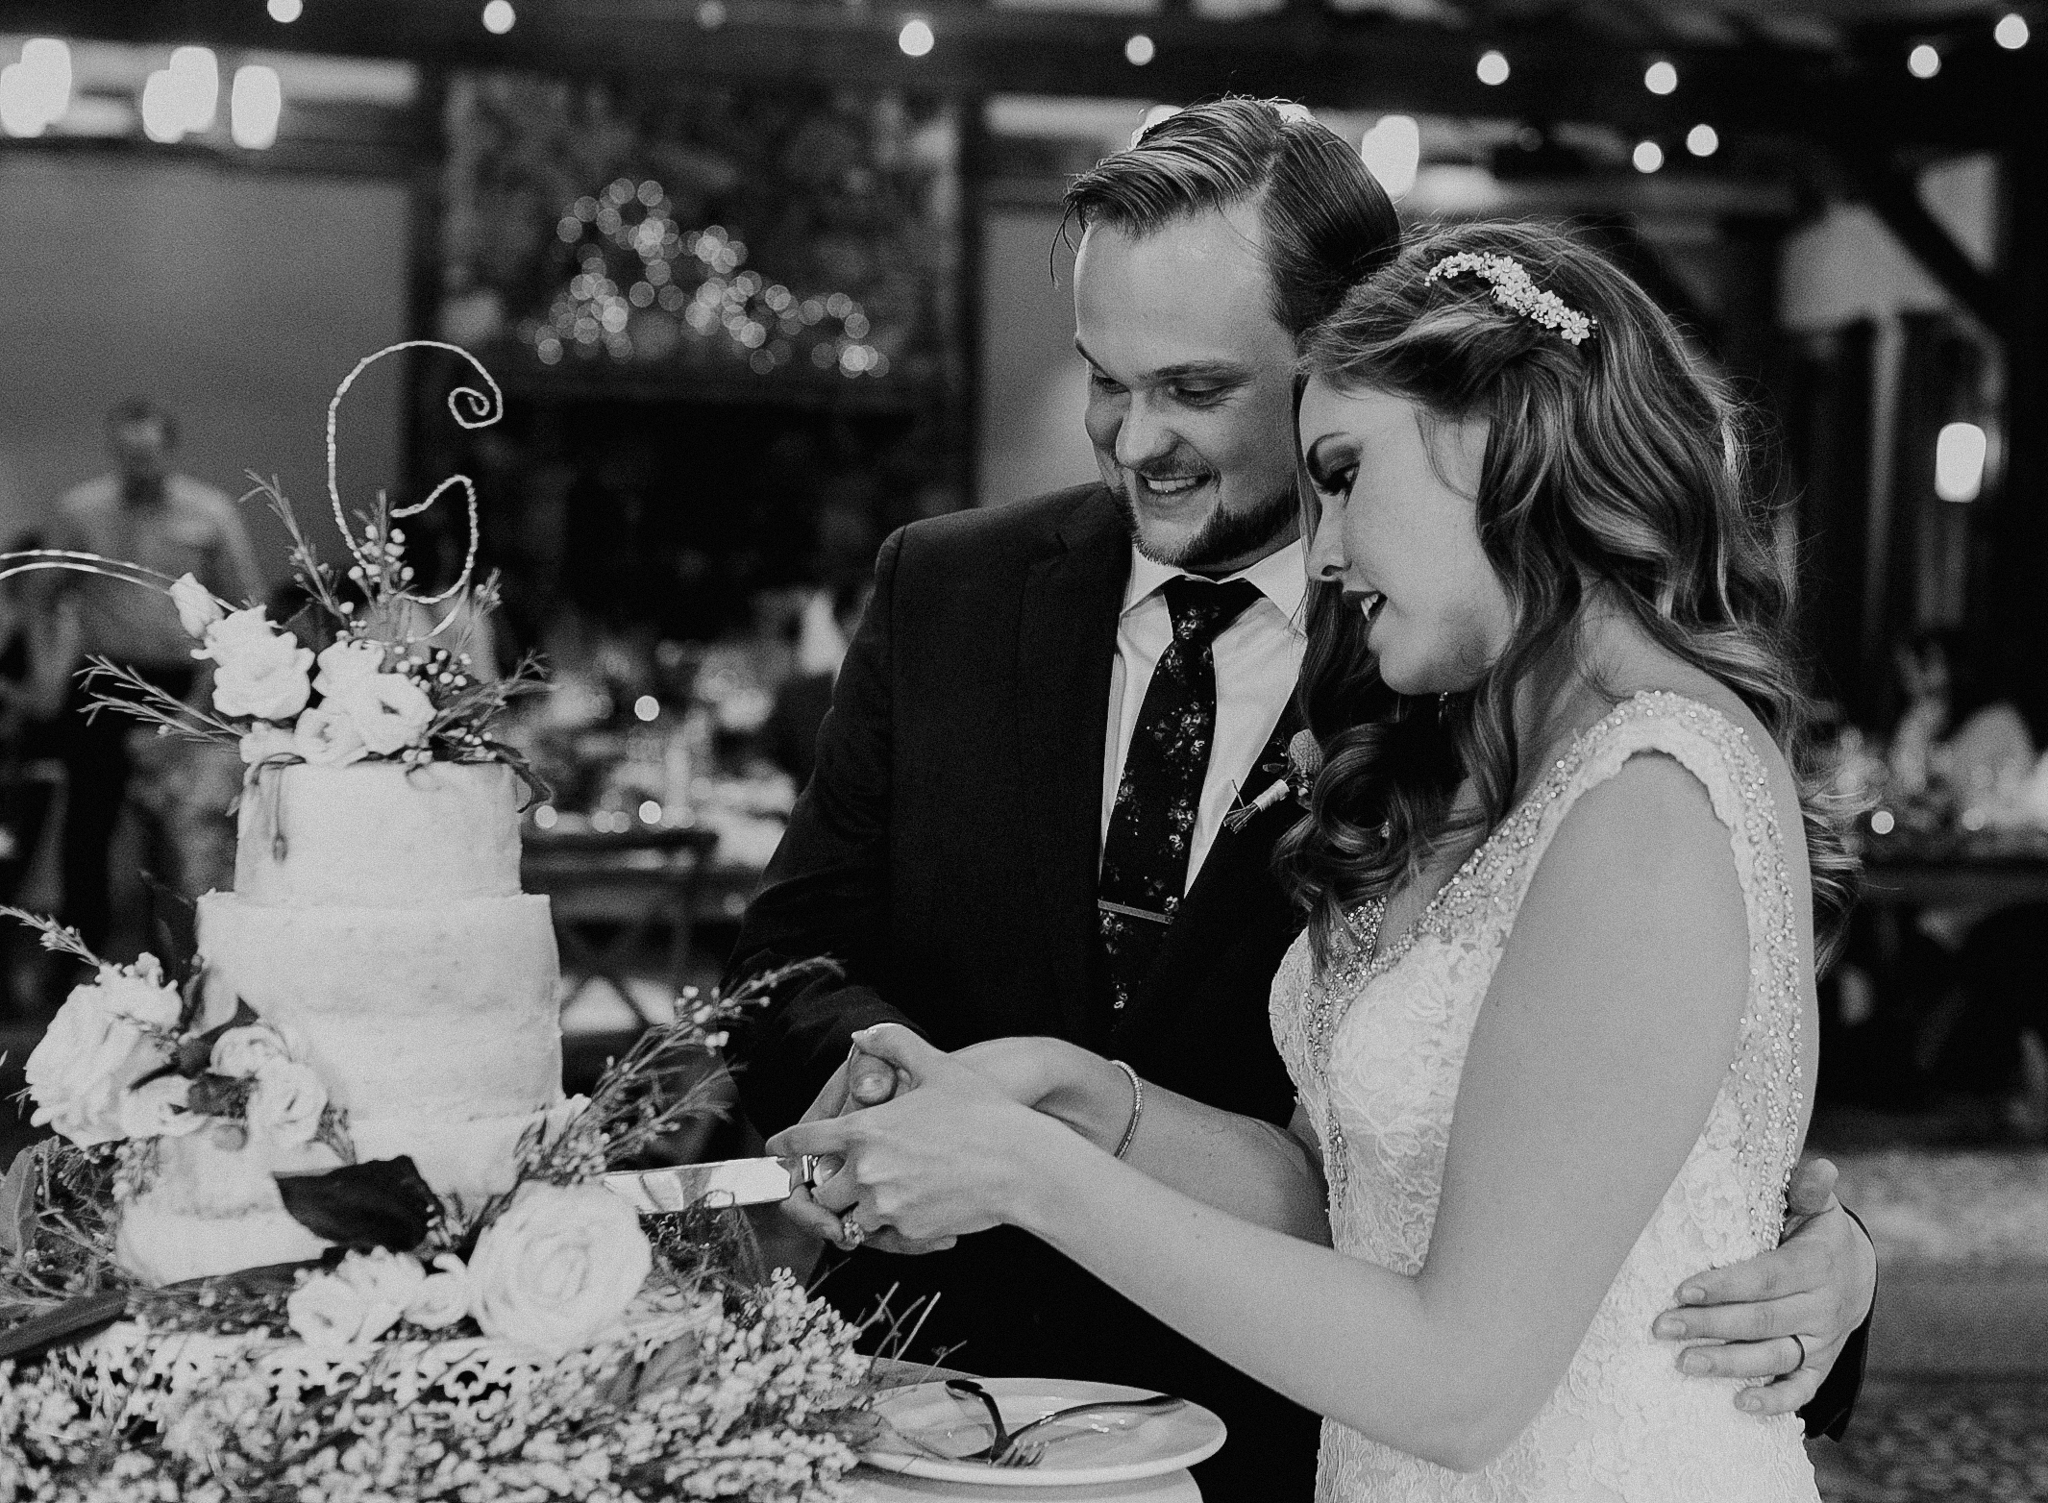 Bride and groom cut cake at Silvertip Resort Wedding reception